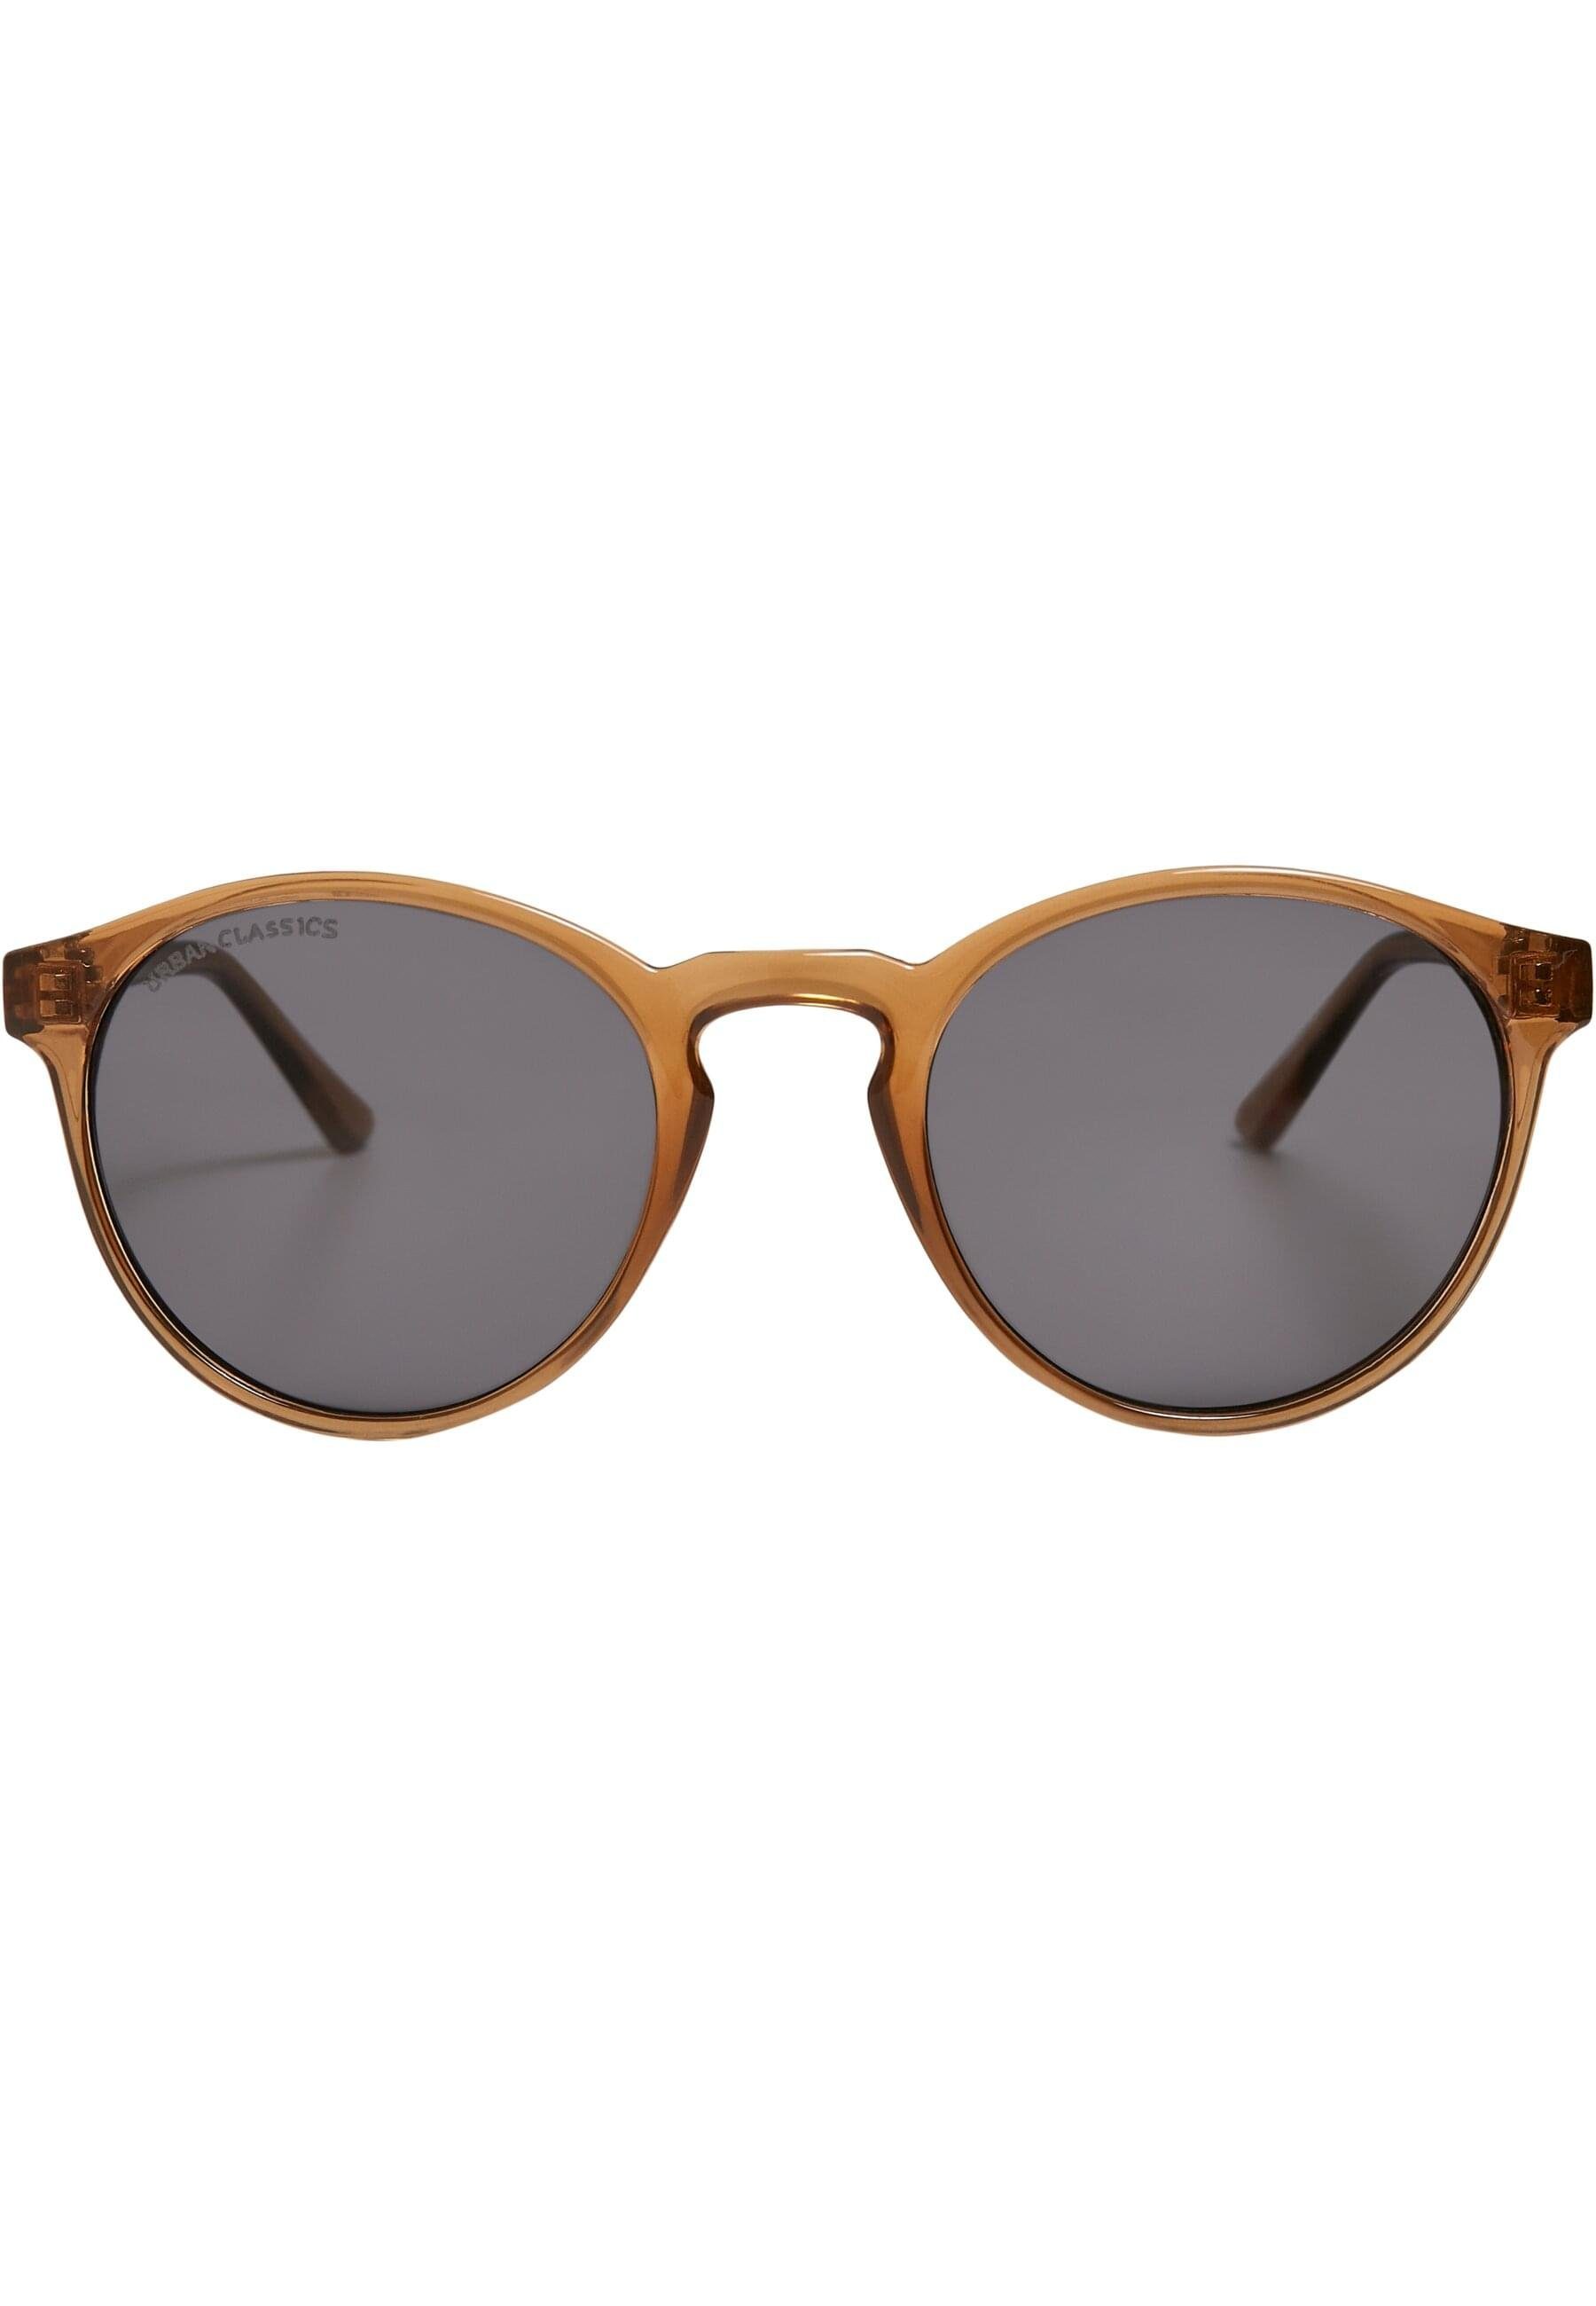 Cypress Sonnenbrille Sunglasses black+brown+blue Unisex CLASSICS 3-Pack URBAN